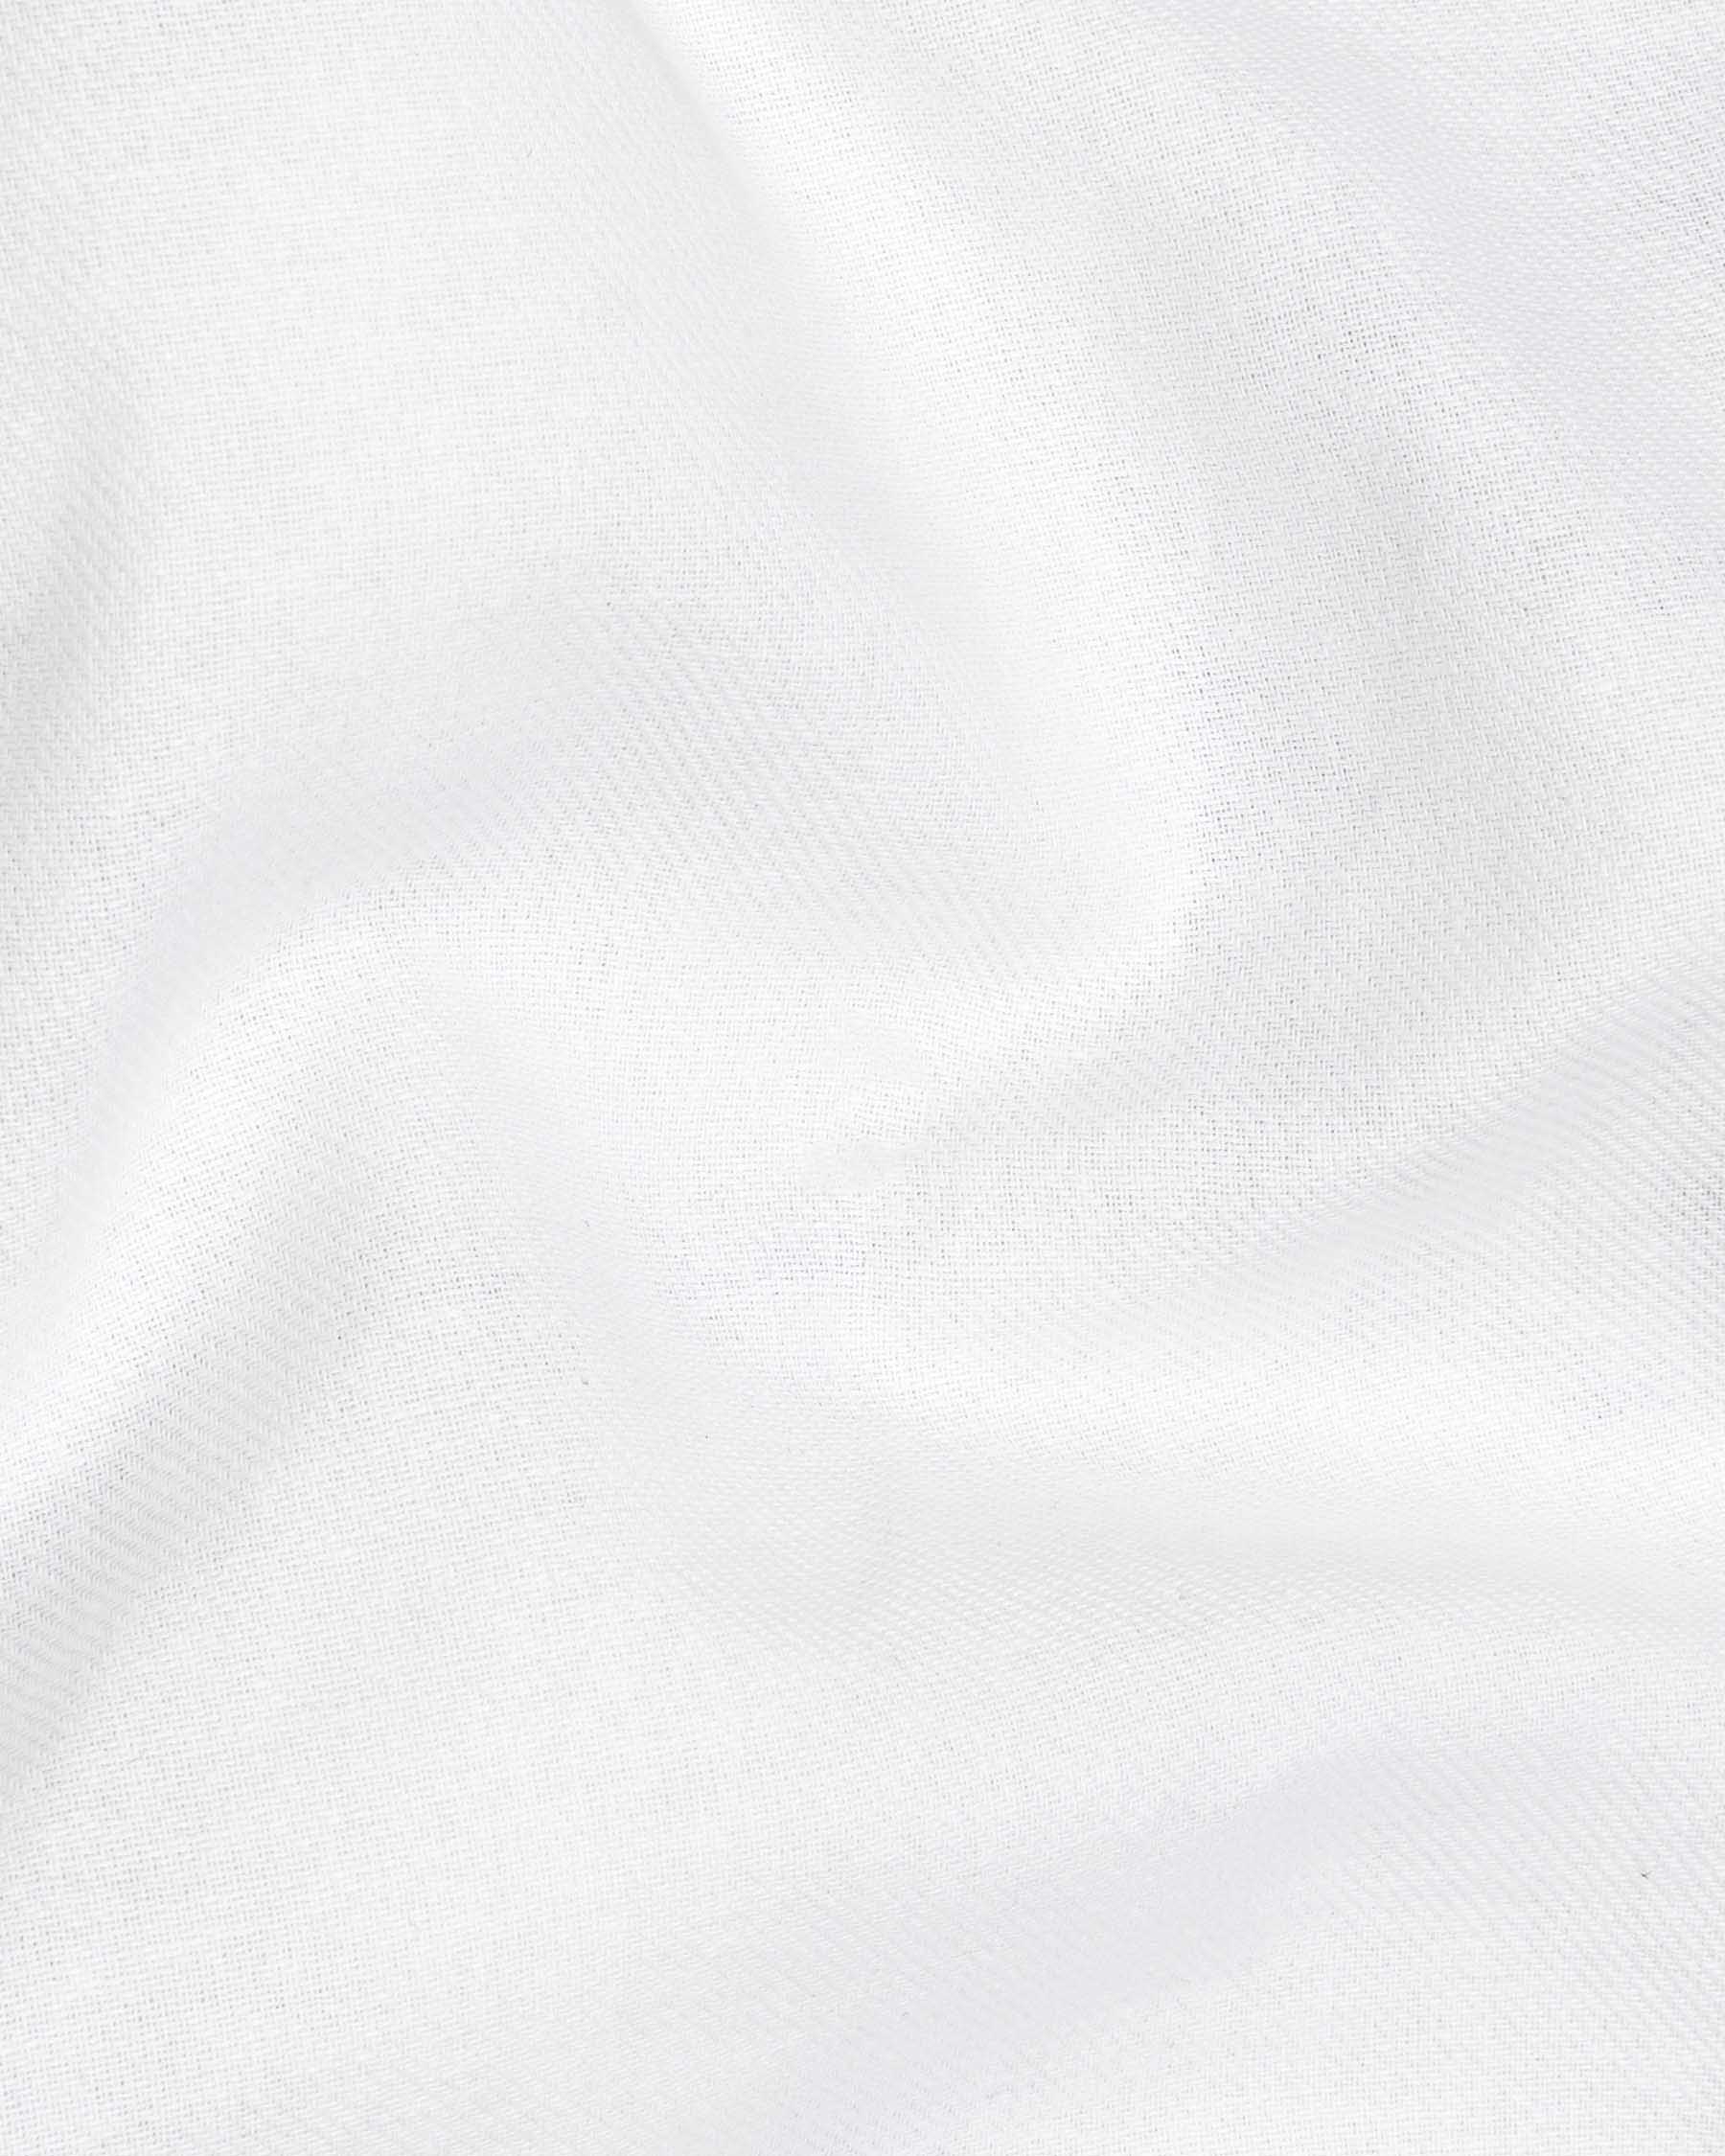 Bright White Twill Textured Premium Cotton Shirt   6456-CA-38, 6456-CA-H-38, 6456-CA-39, 6456-CA-H-39, 6456-CA-40, 6456-CA-H-40, 6456-CA-42, 6456-CA-H-42, 6456-CA-44, 6456-CA-H-44, 6456-CA-46, 6456-CA-H-46, 6456-CA-48, 6456-CA-H-48, 6456-CA-50, 6456-CA-H-50, 6456-CA-52, 6456-CA-H-52